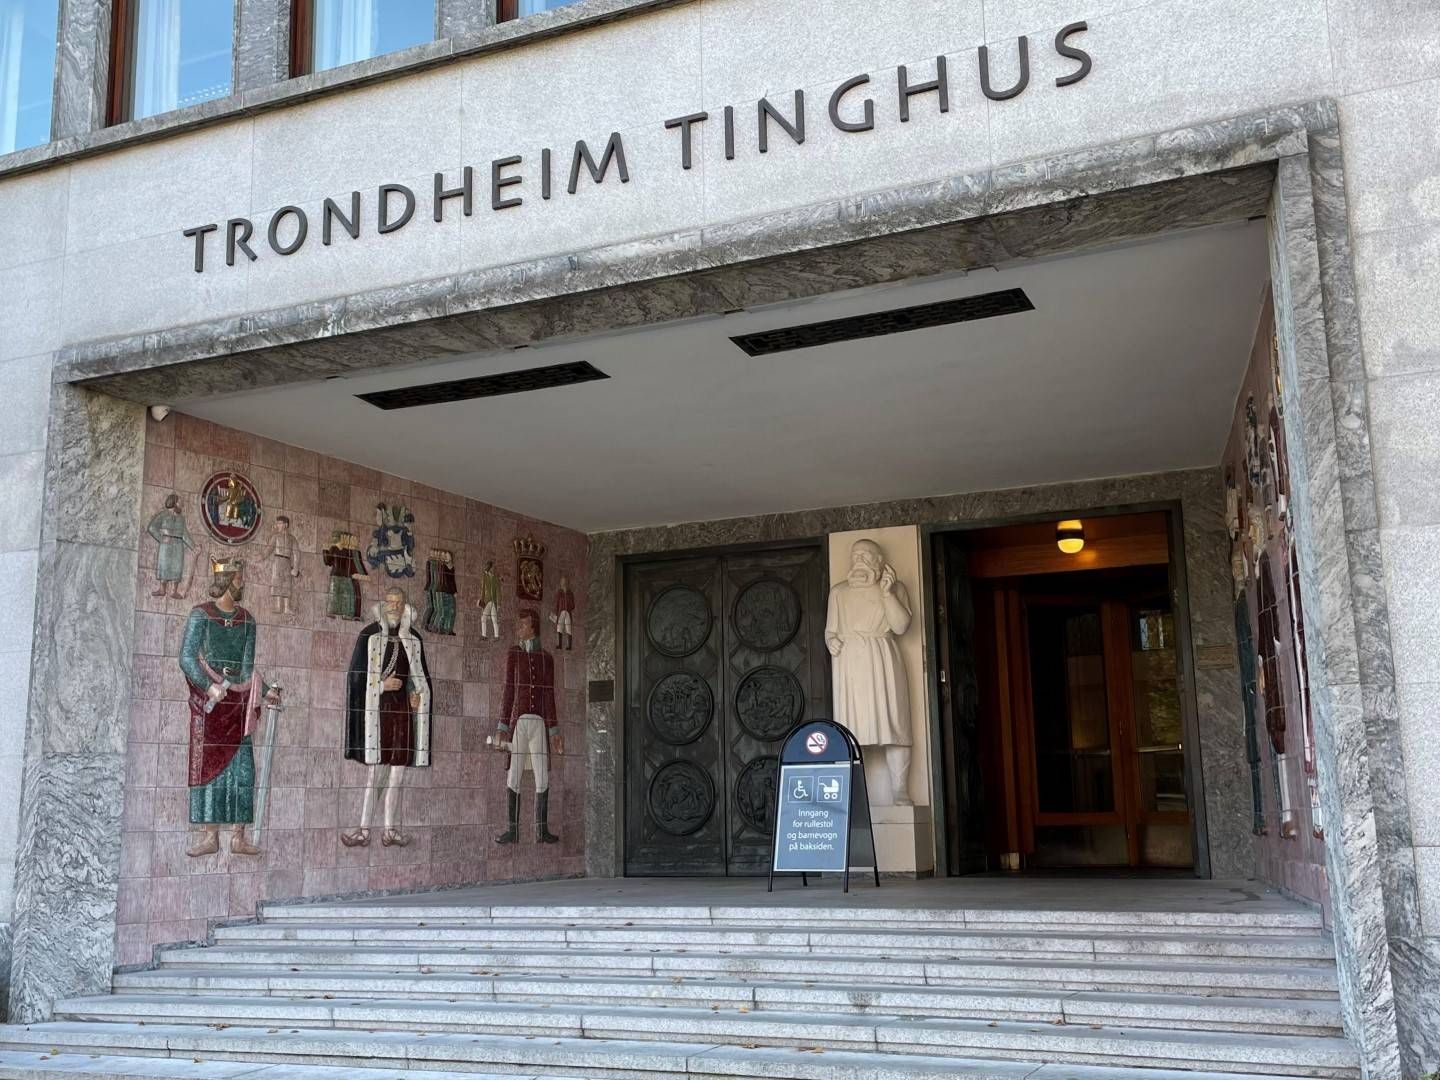 Partene møttes i Trondheim tinghus. | Foto: Aleksander Losnegård, AdvokatWatch